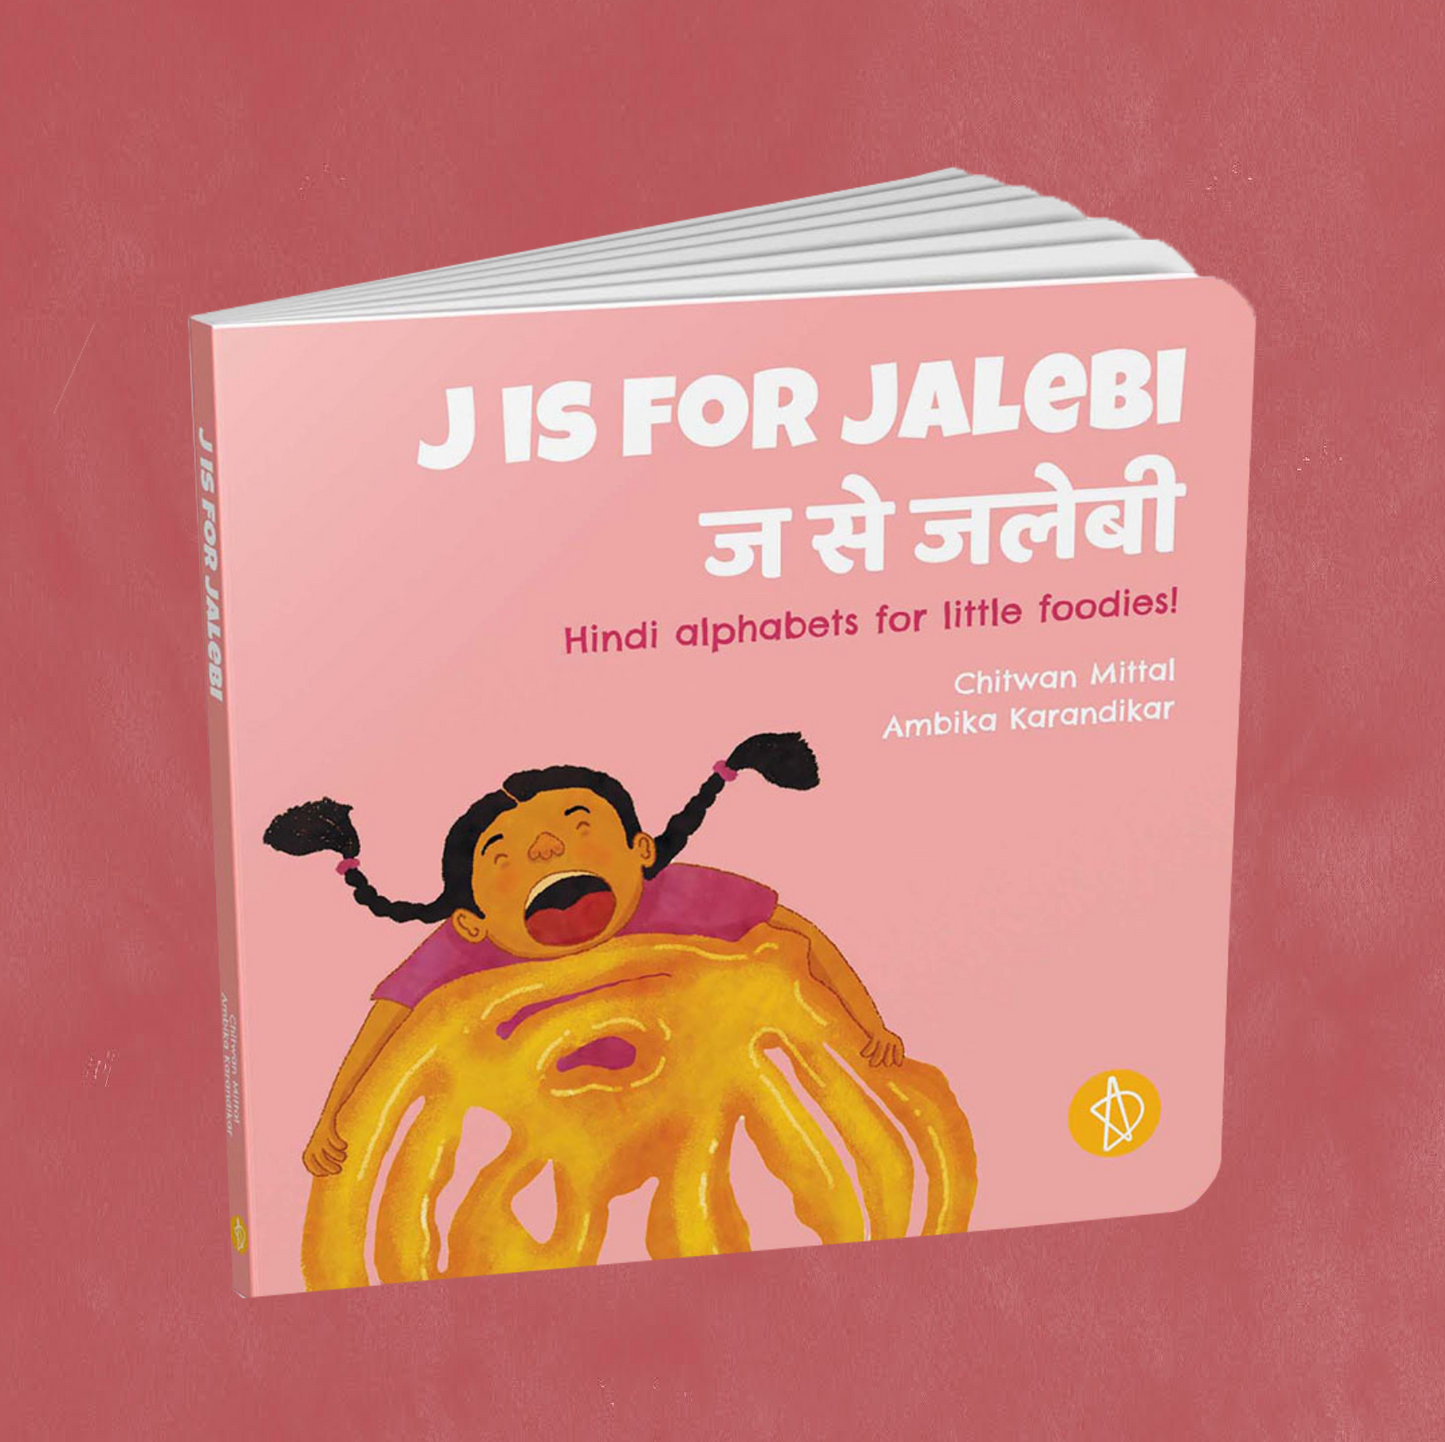 J is for Jalebi by Adidev Press